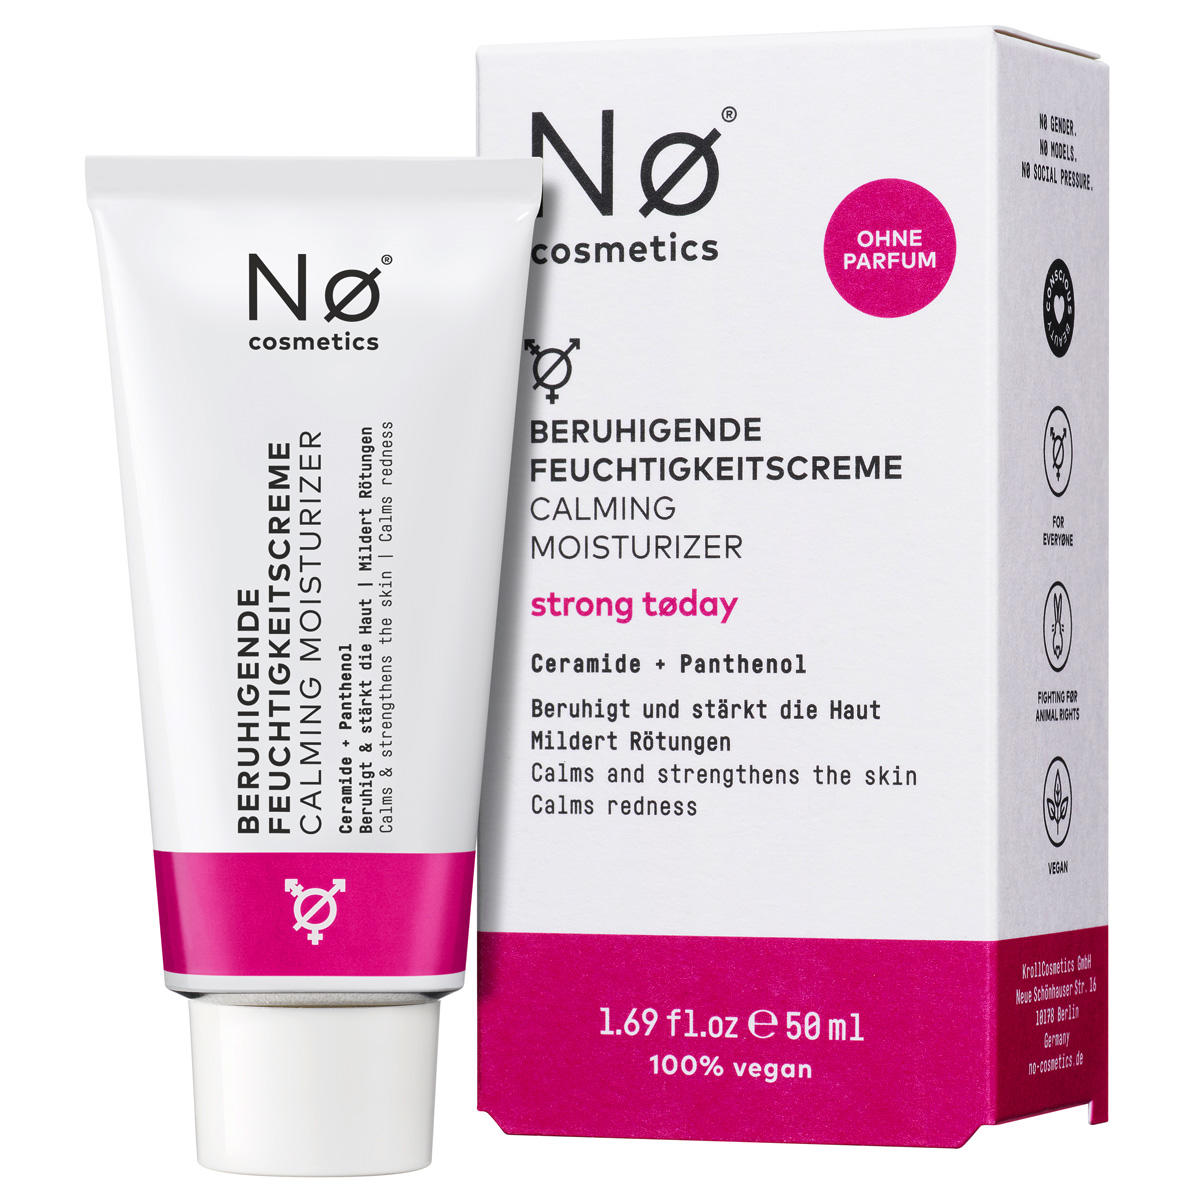 Nø Cosmetics strong tøday Beruhigende Feuchtigkeitscreme crème hydratante apaisante 50 ml - 1